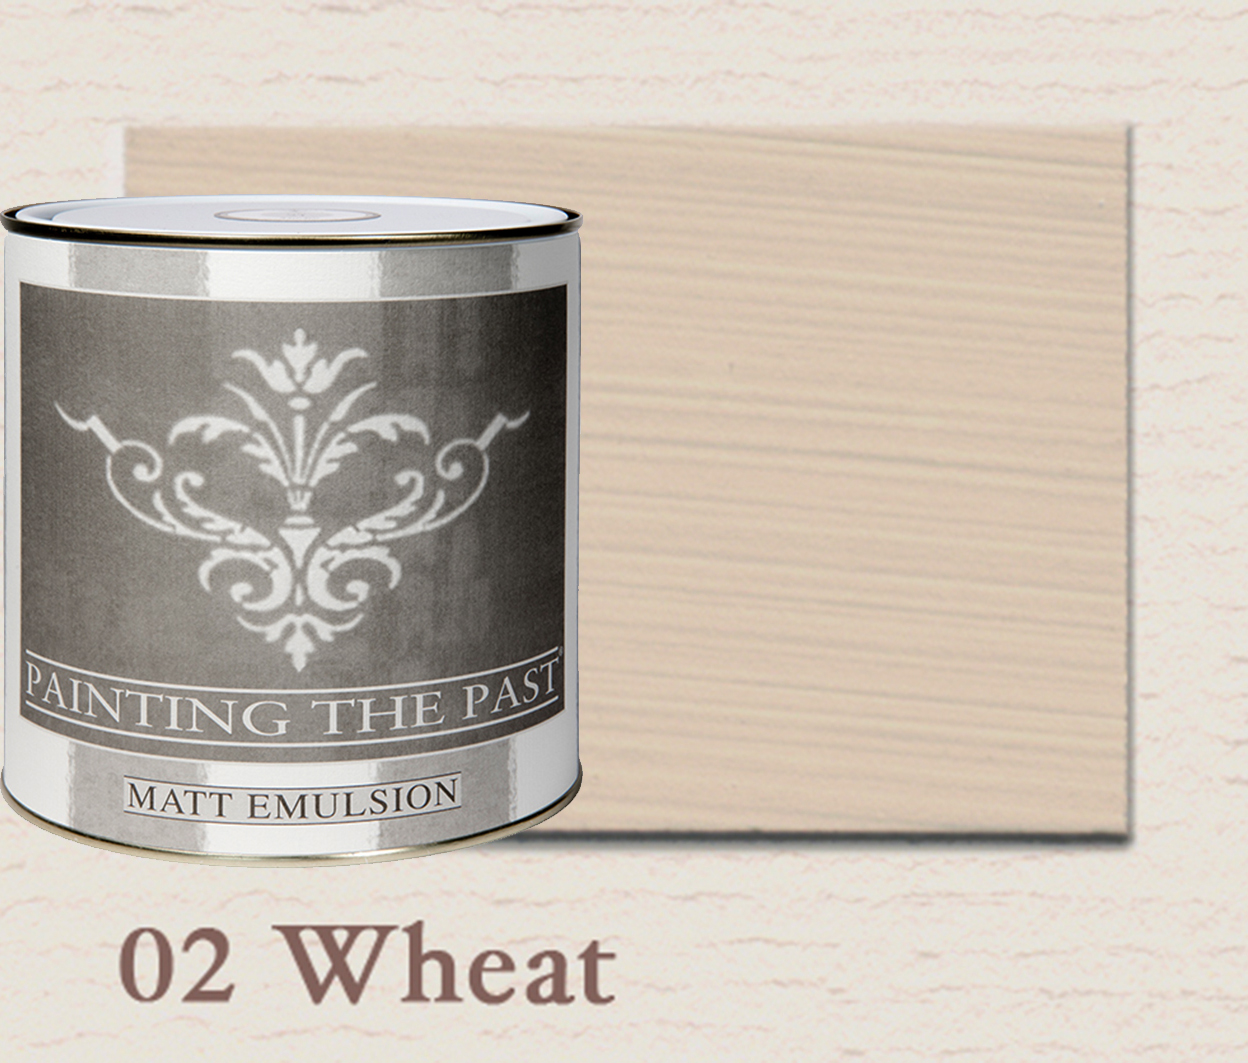 Painting The Past Matt Emulsion Wheat